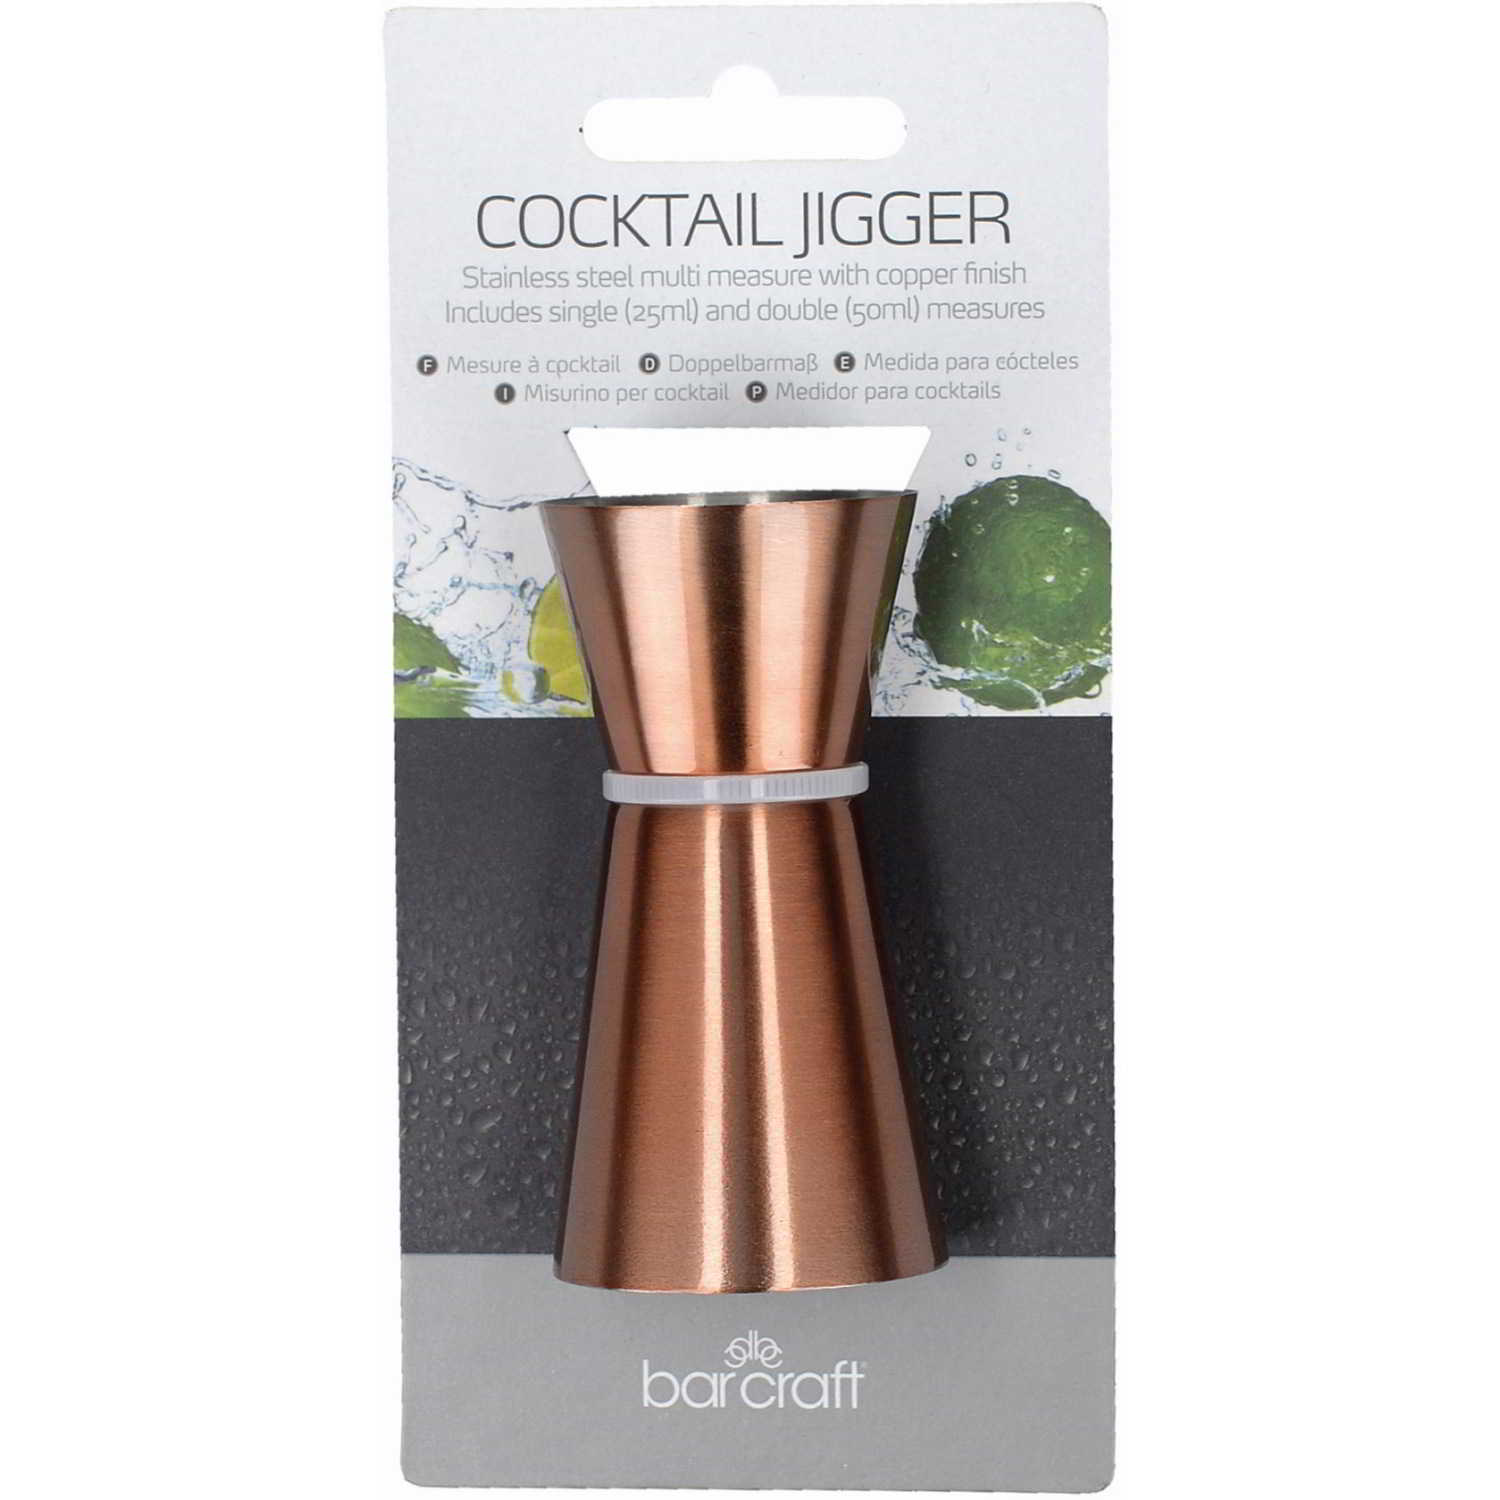 BarCraft Cocktail Jigger